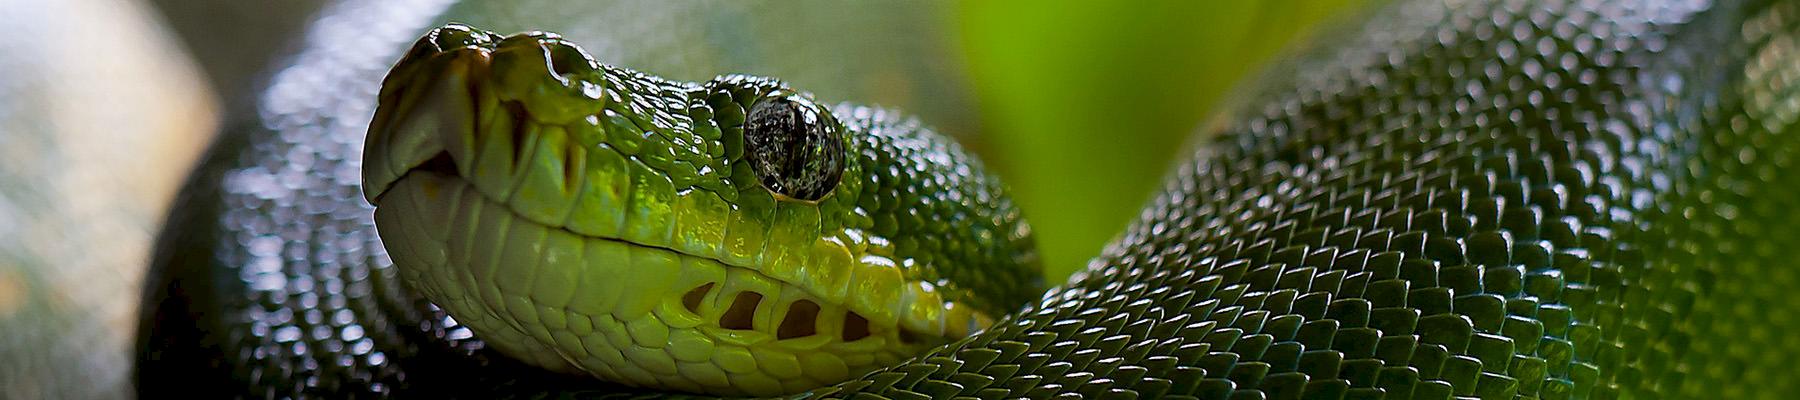 Green Tree Python Morelia viridis